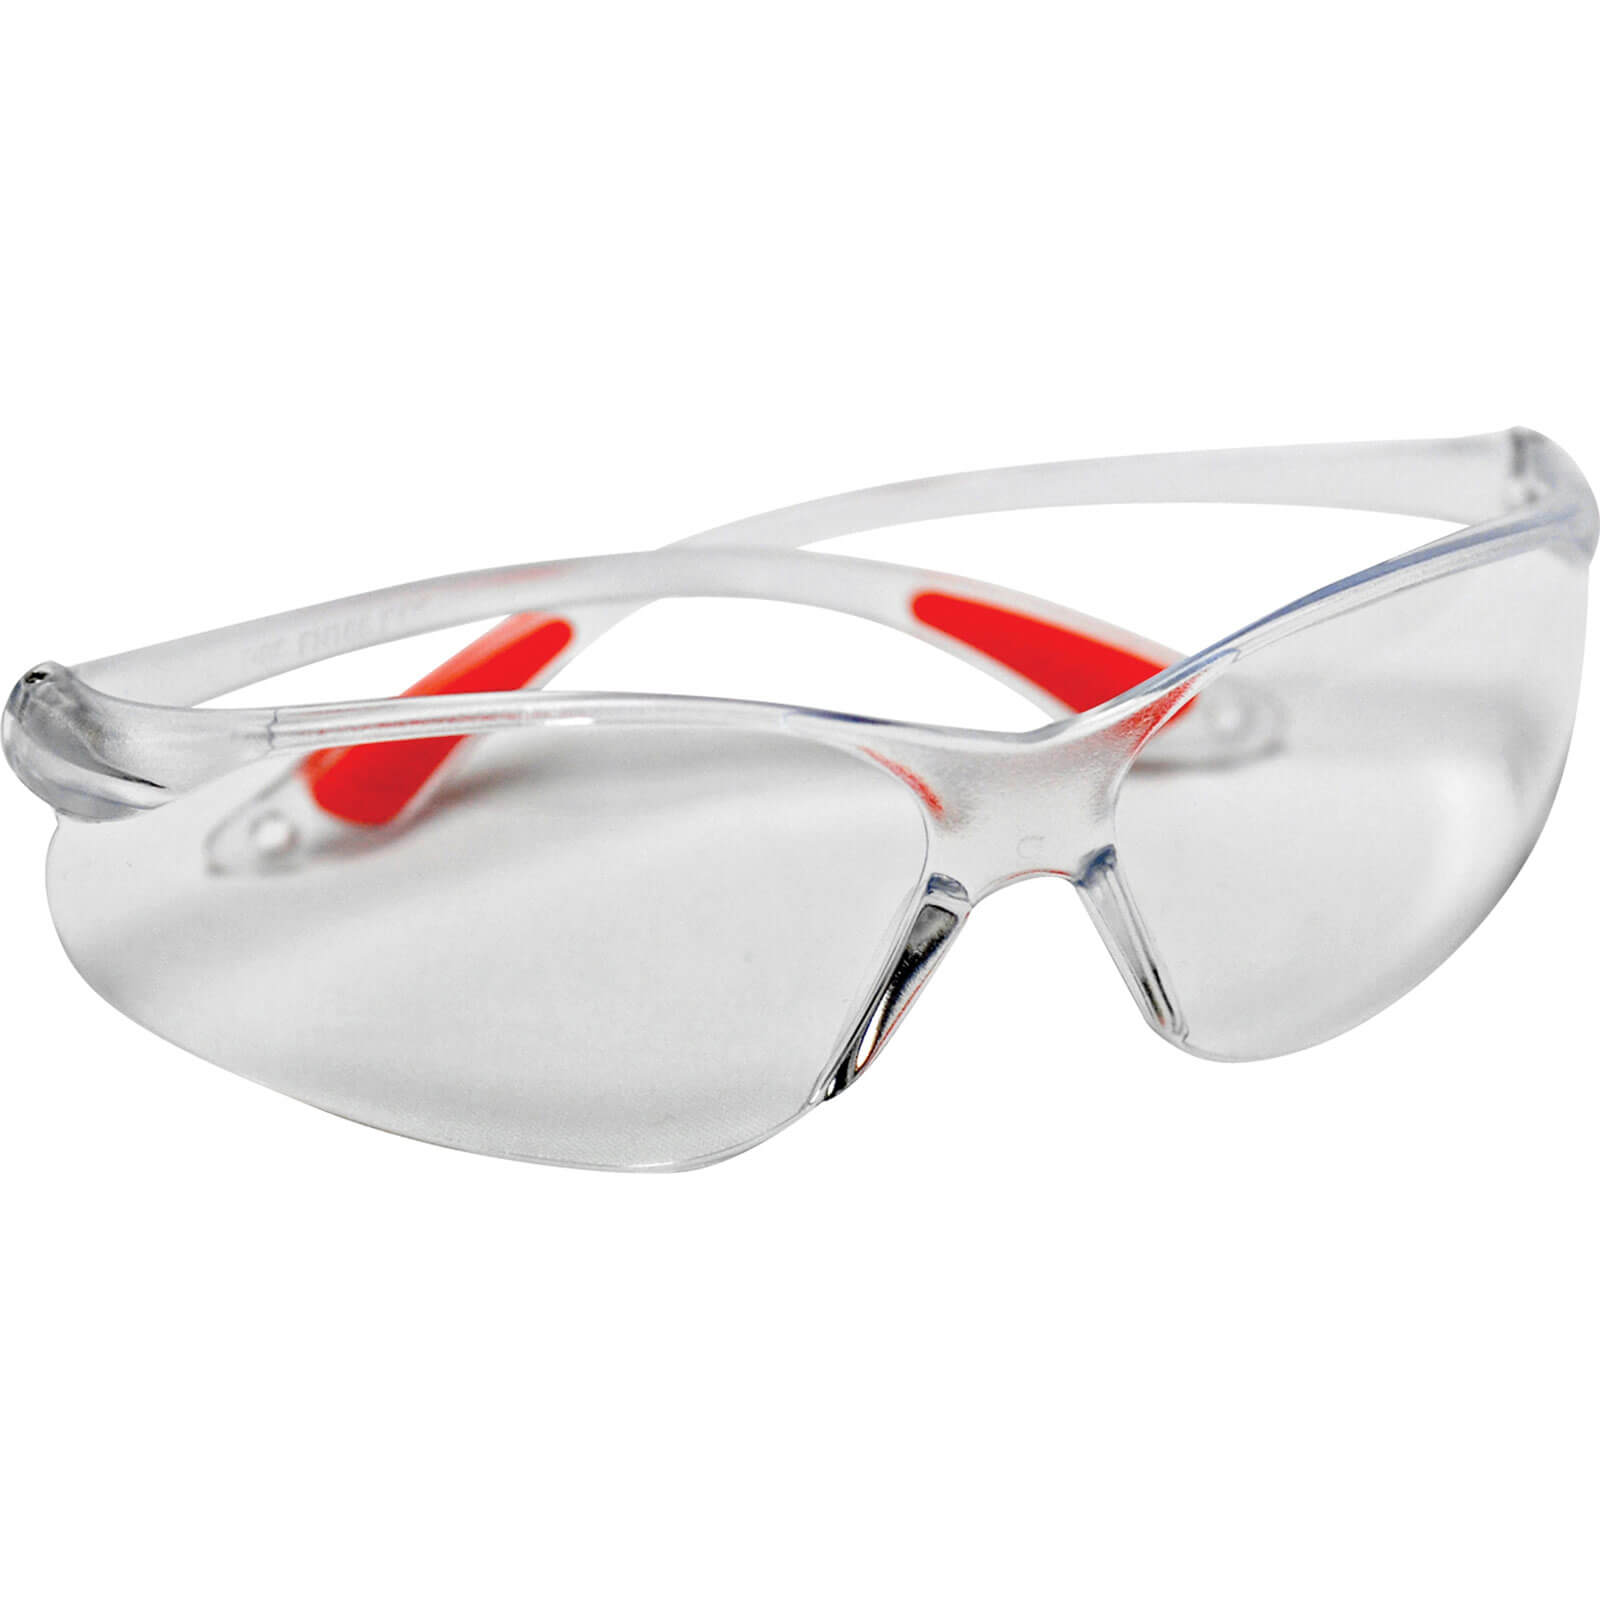 Image of Vitrex Premium Safety Glasses